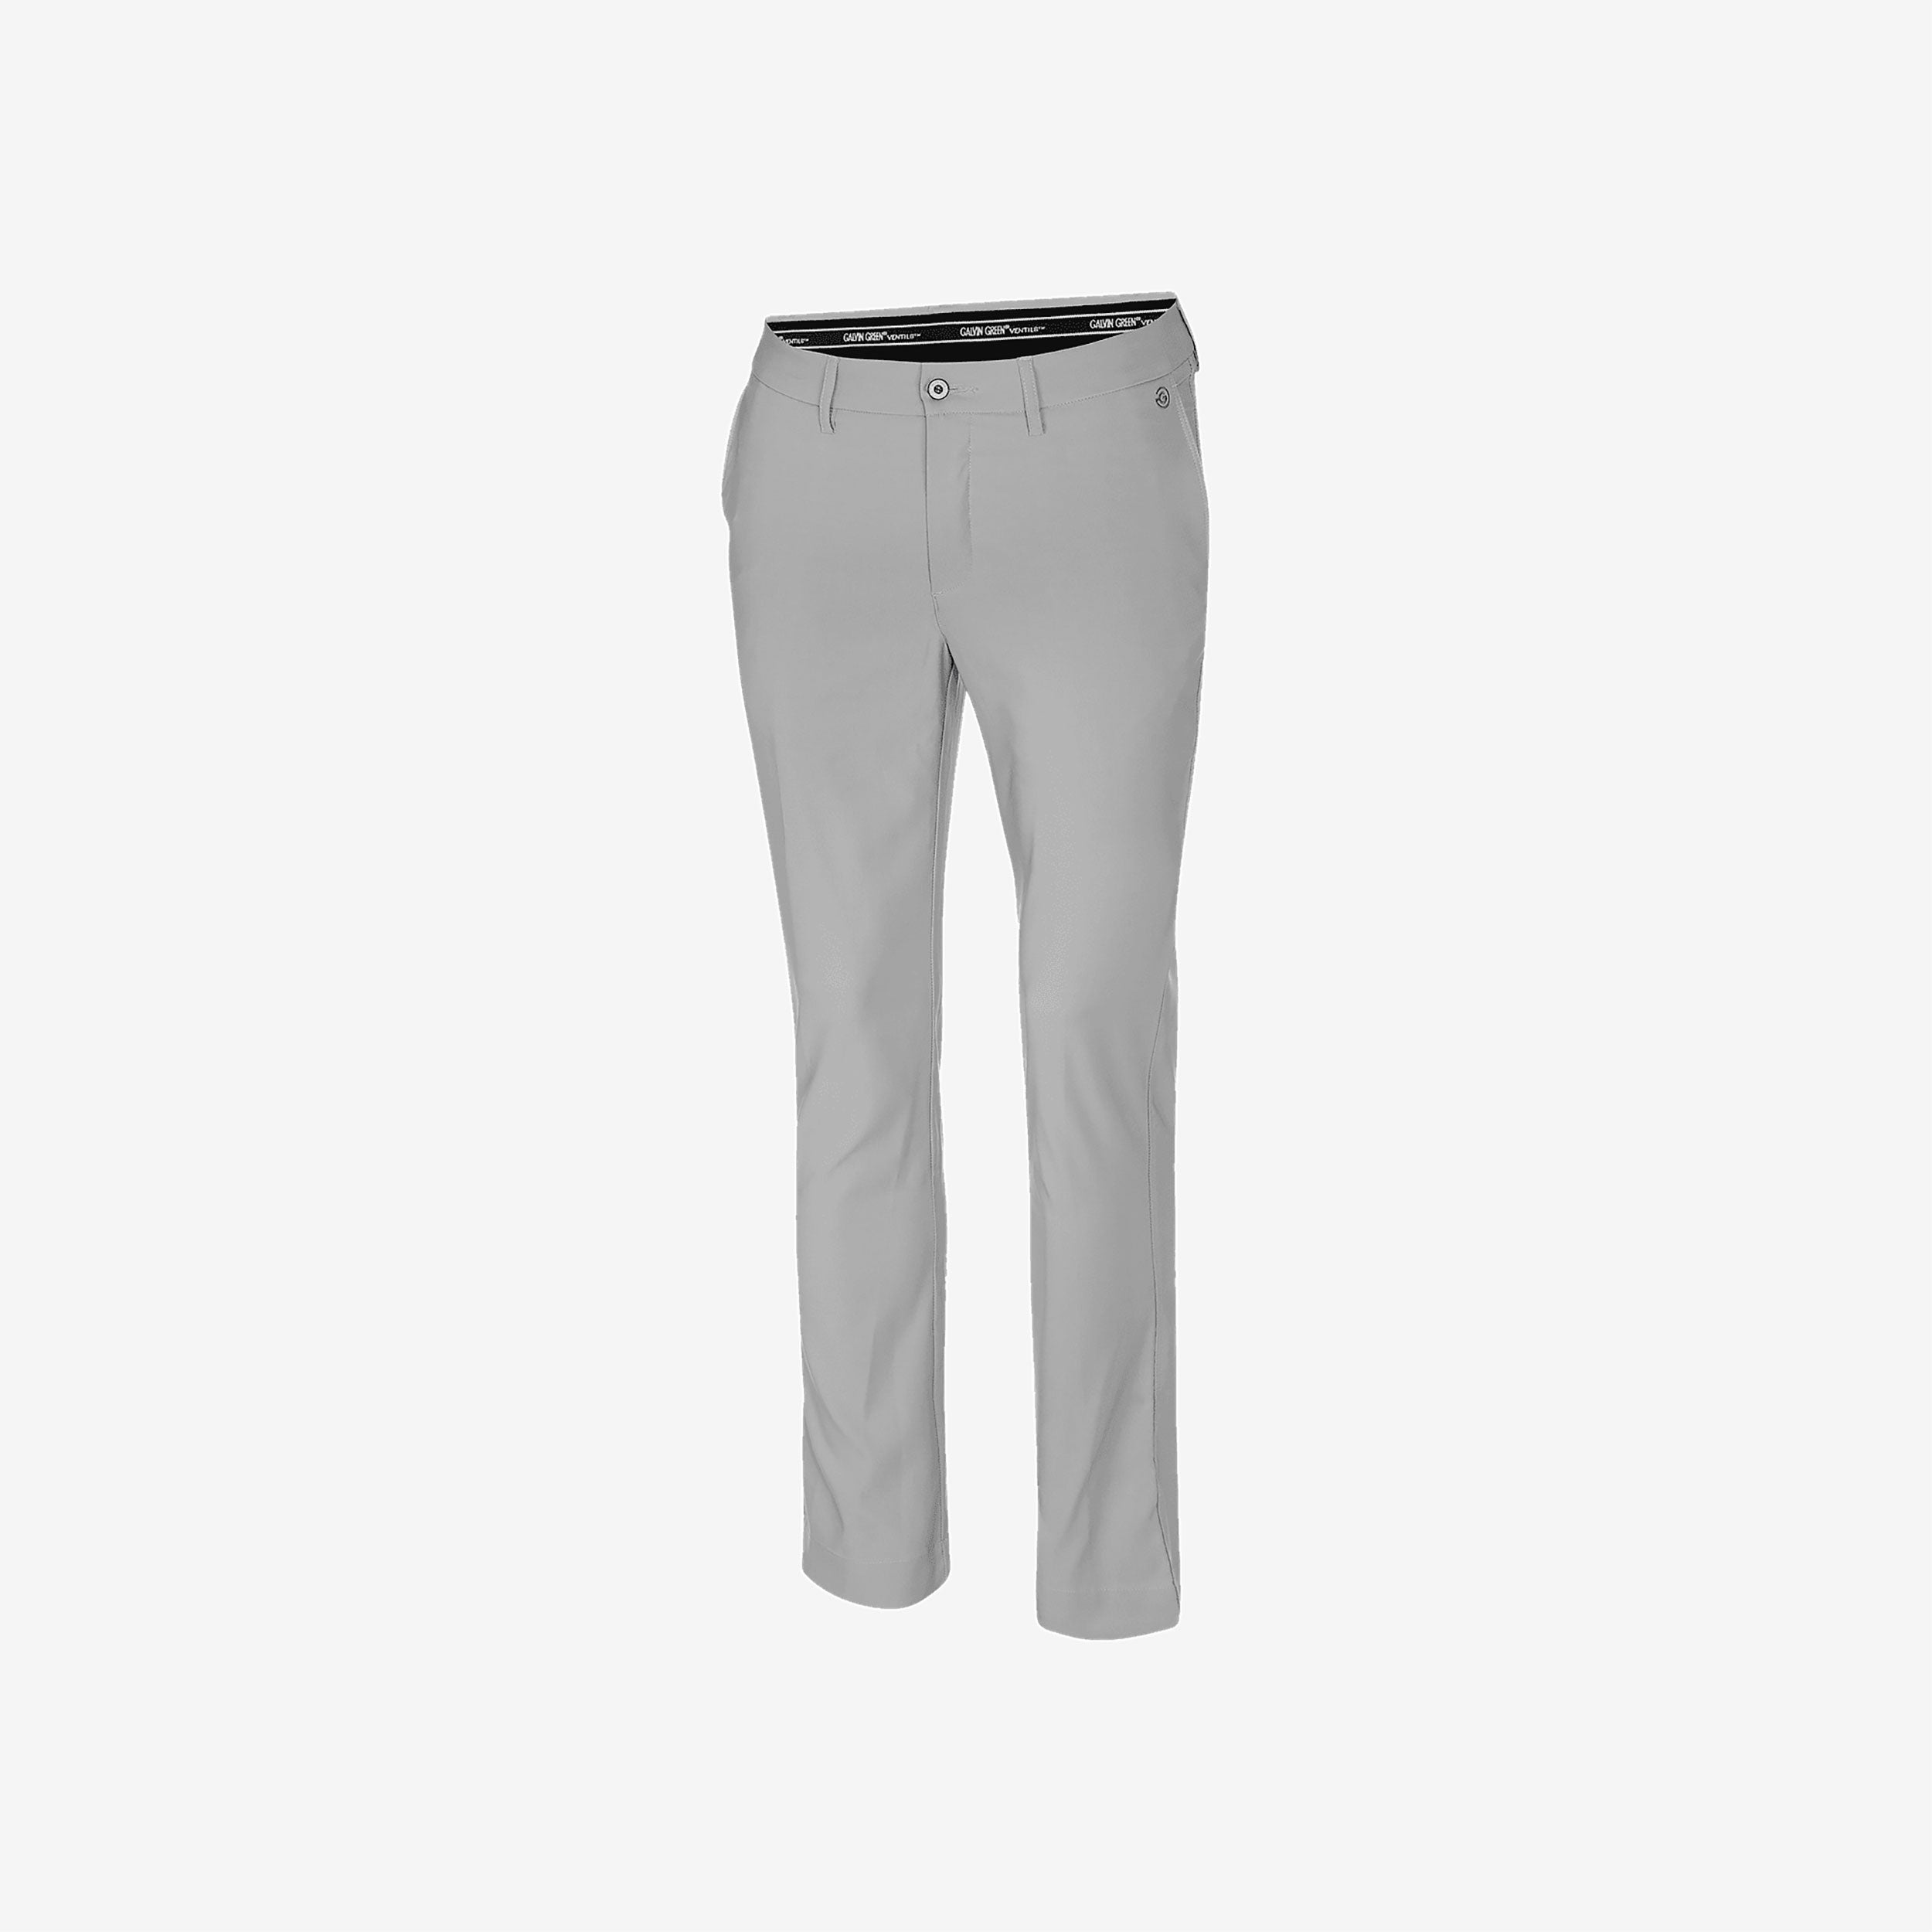 Slazenger Mens Performance Golf Trousers Pants Bottoms Lightweight Zip Slim  Fit | eBay